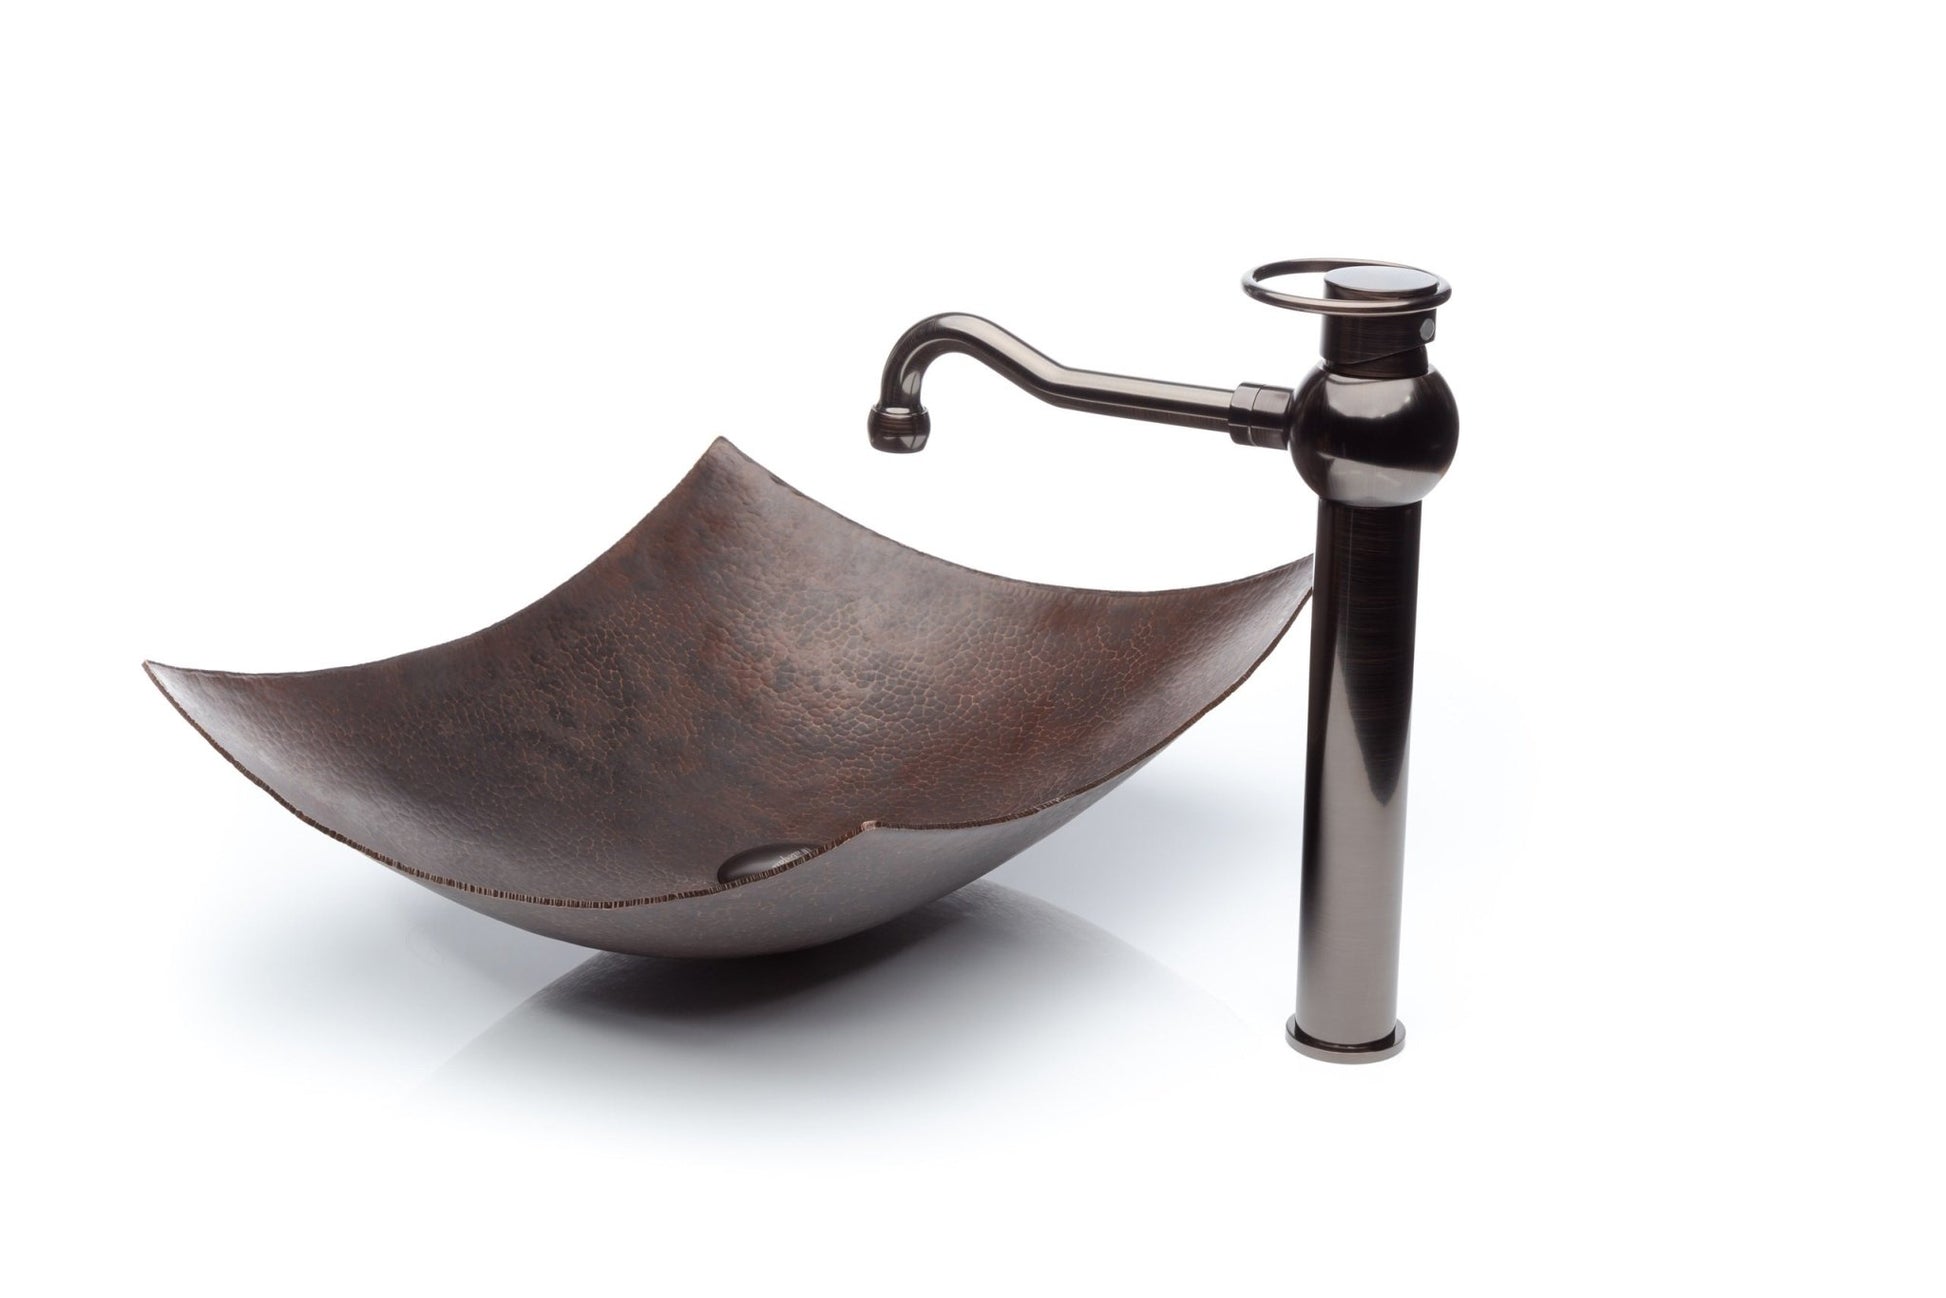 Sole Oil Rubbed Bronze Faucet with Industrial Copper Sink Combo Set - |VESIMI Design|